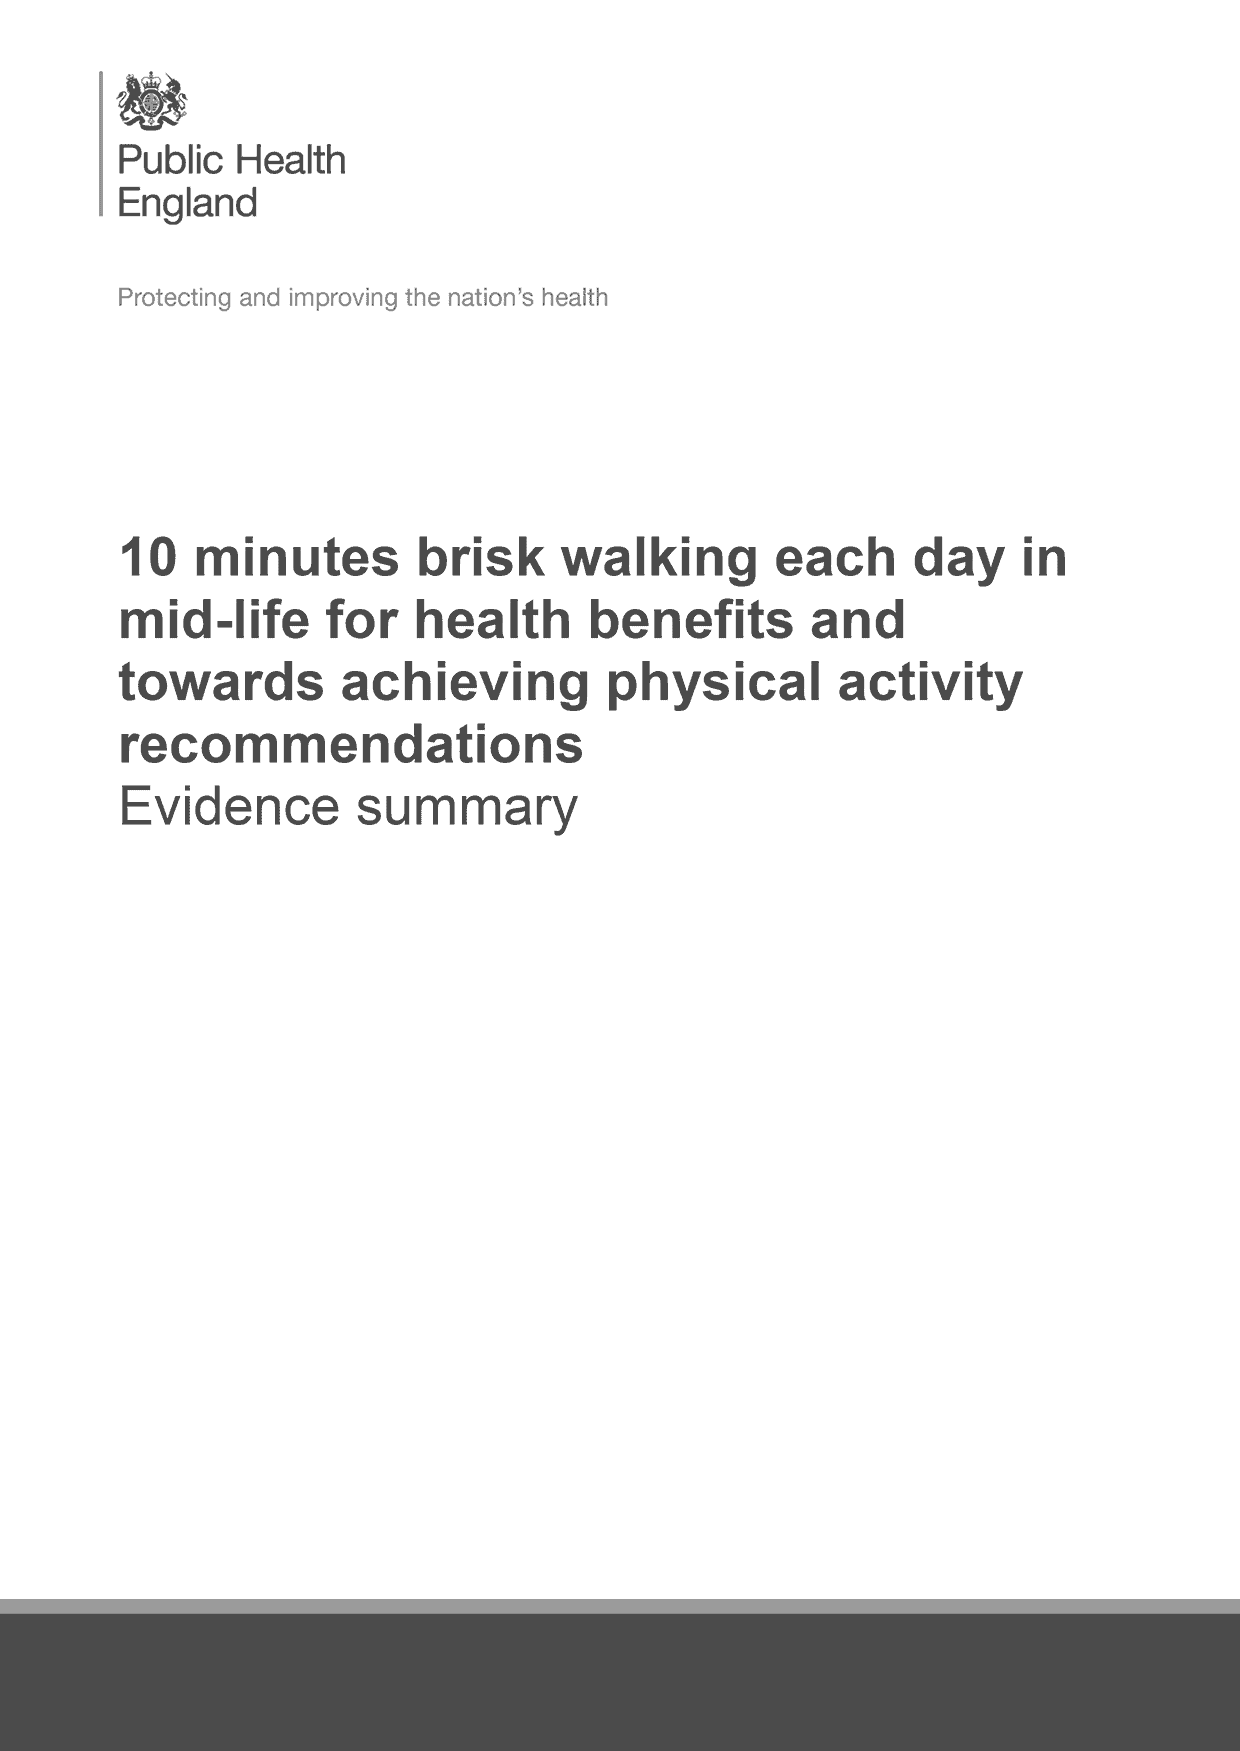 Health benefits of 10 minutes brisk walking each day